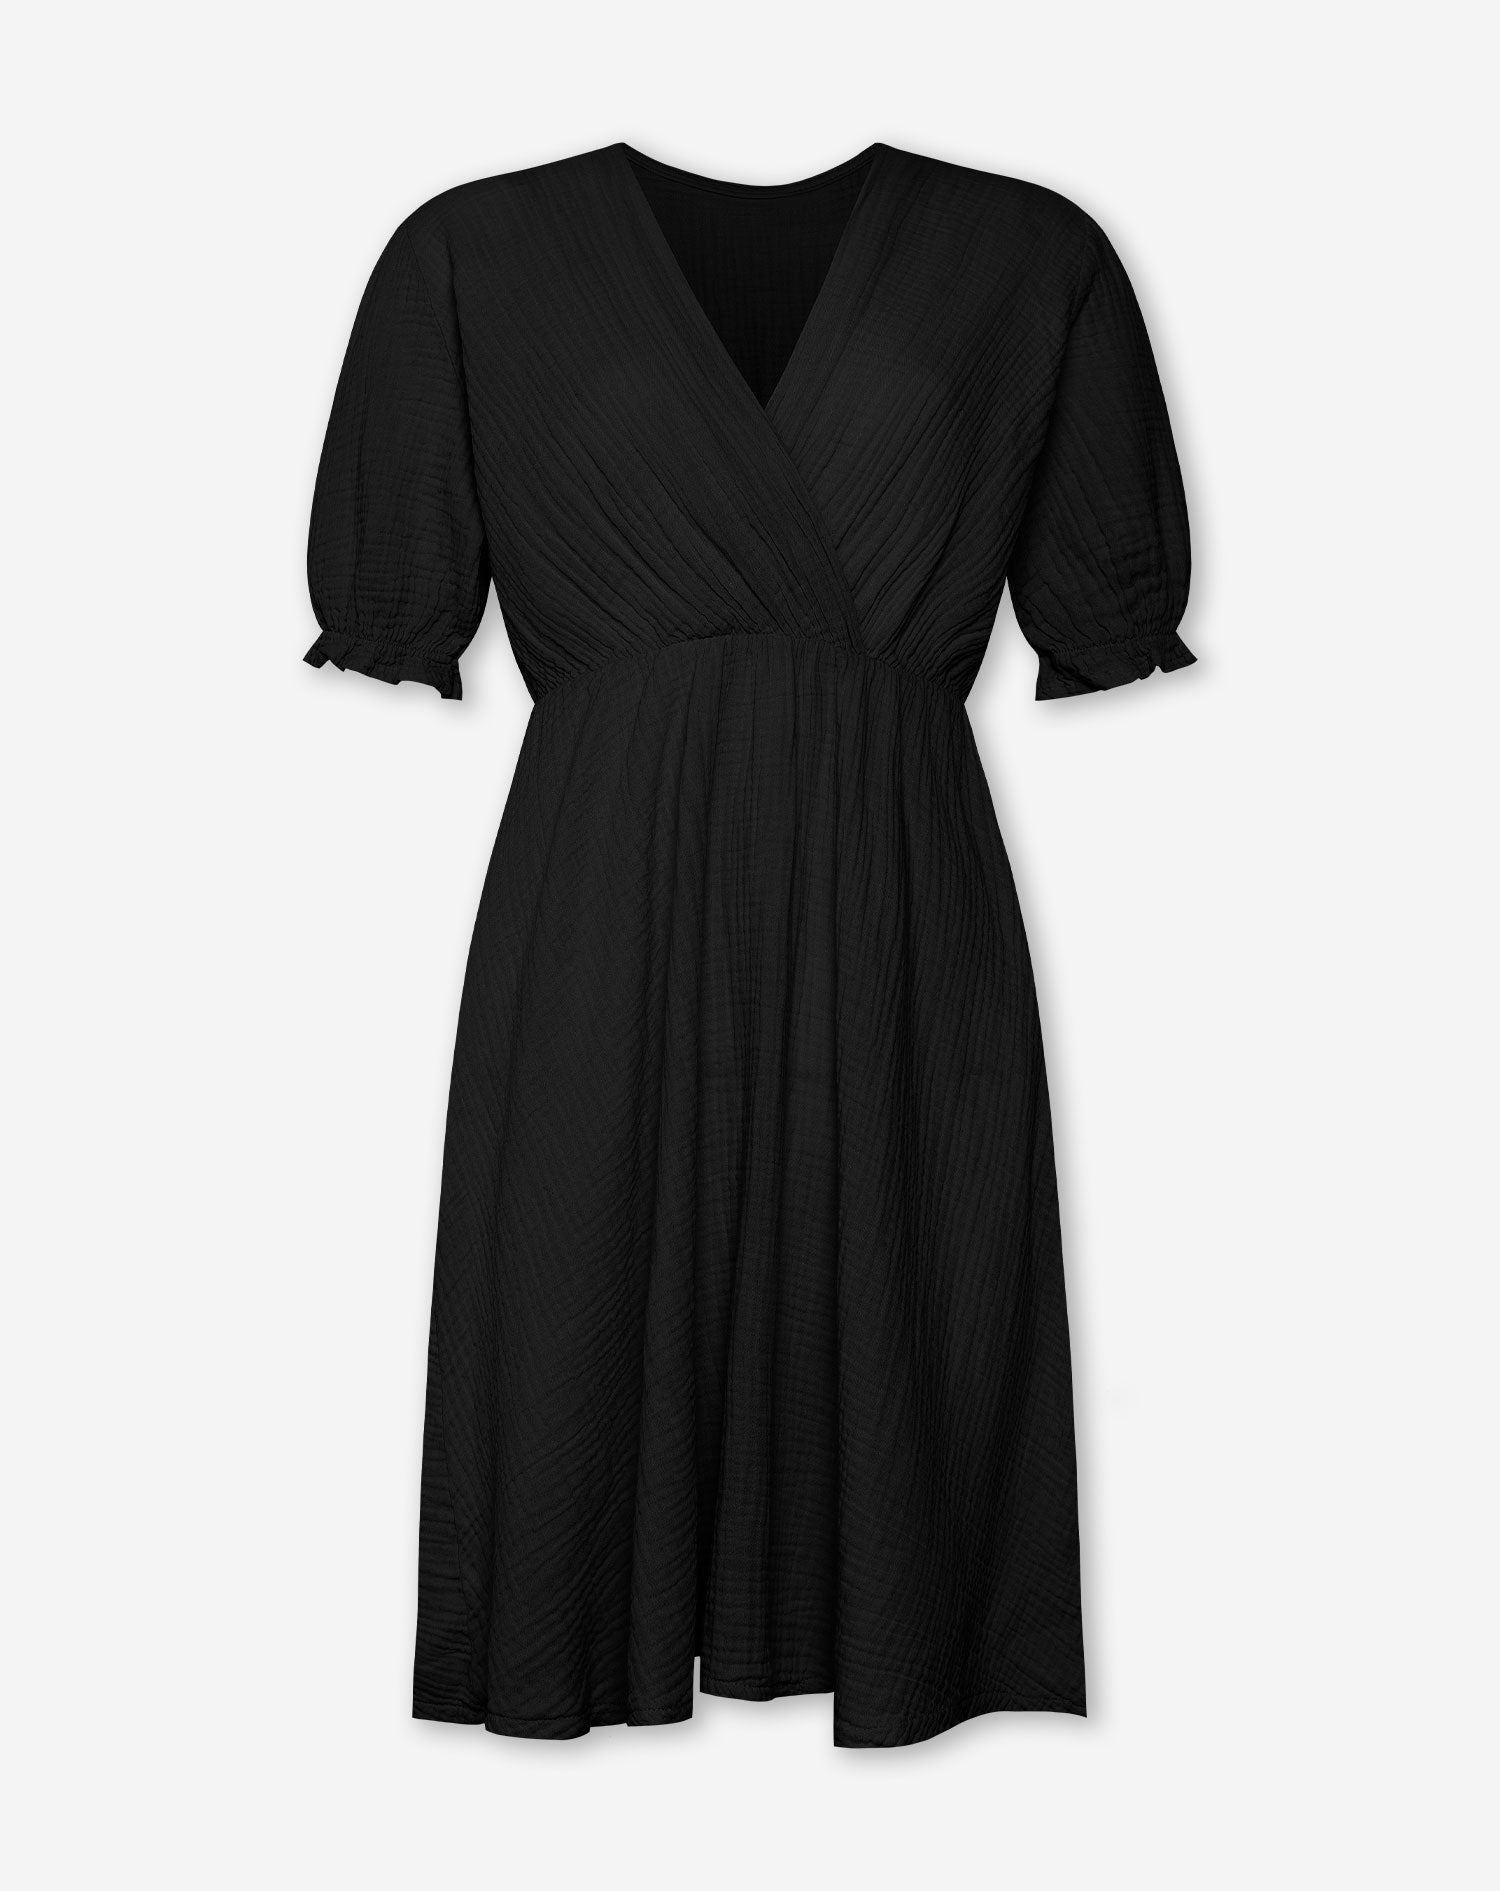 DILA MOUSSELINE DRESS BLACK